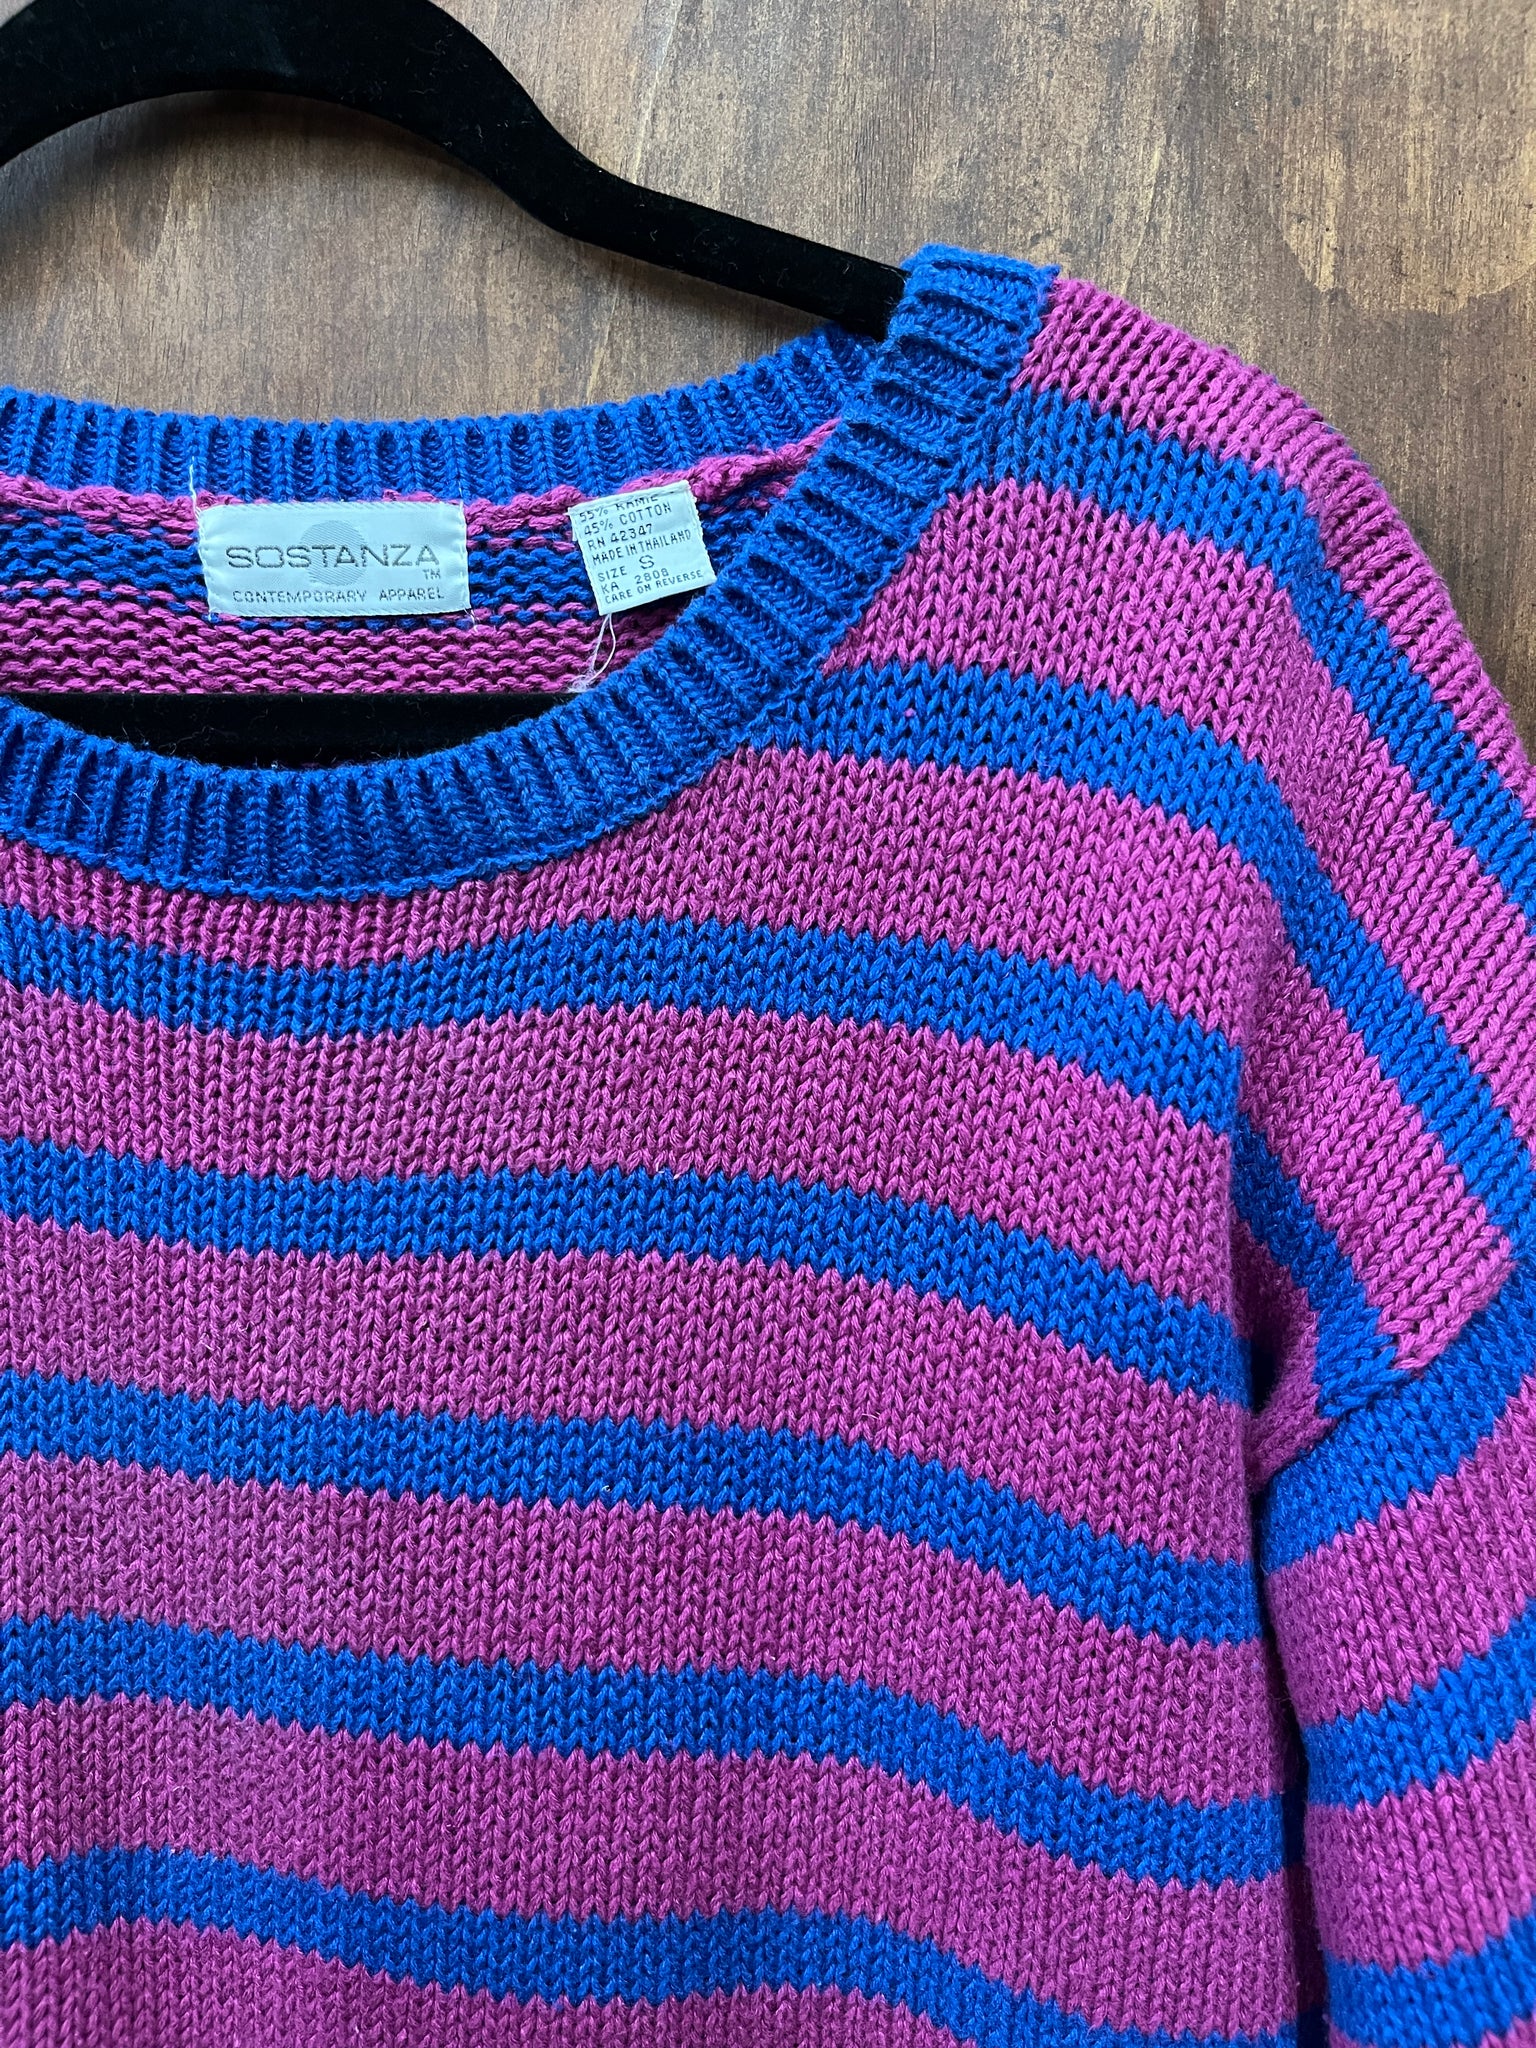 1990s SWEATER- Sostanza magenta/blue stripe oversized